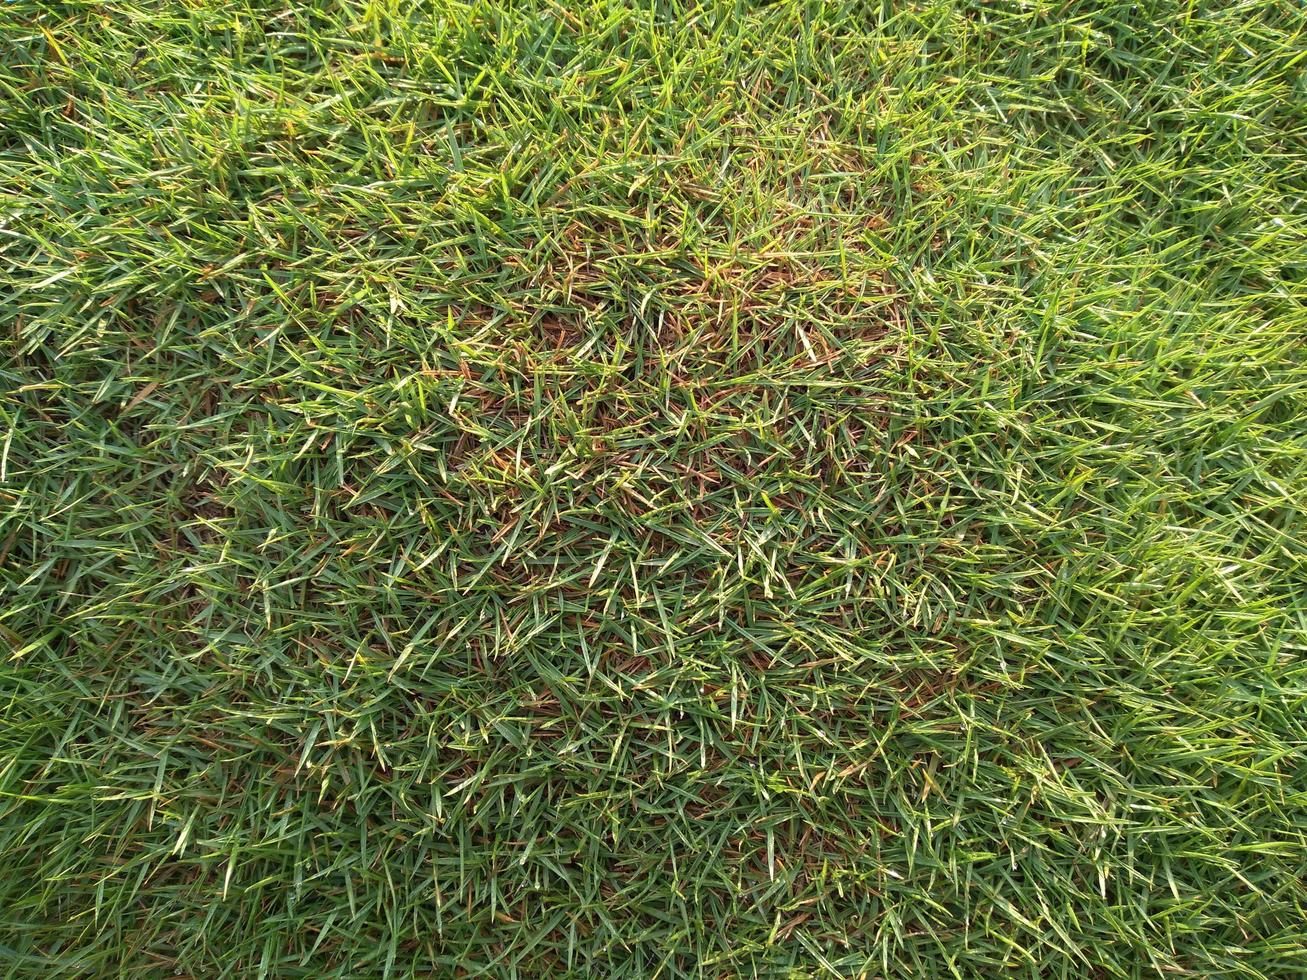 campo de textura de hierba verde fresca como fondo, vista superior, horizontal foto